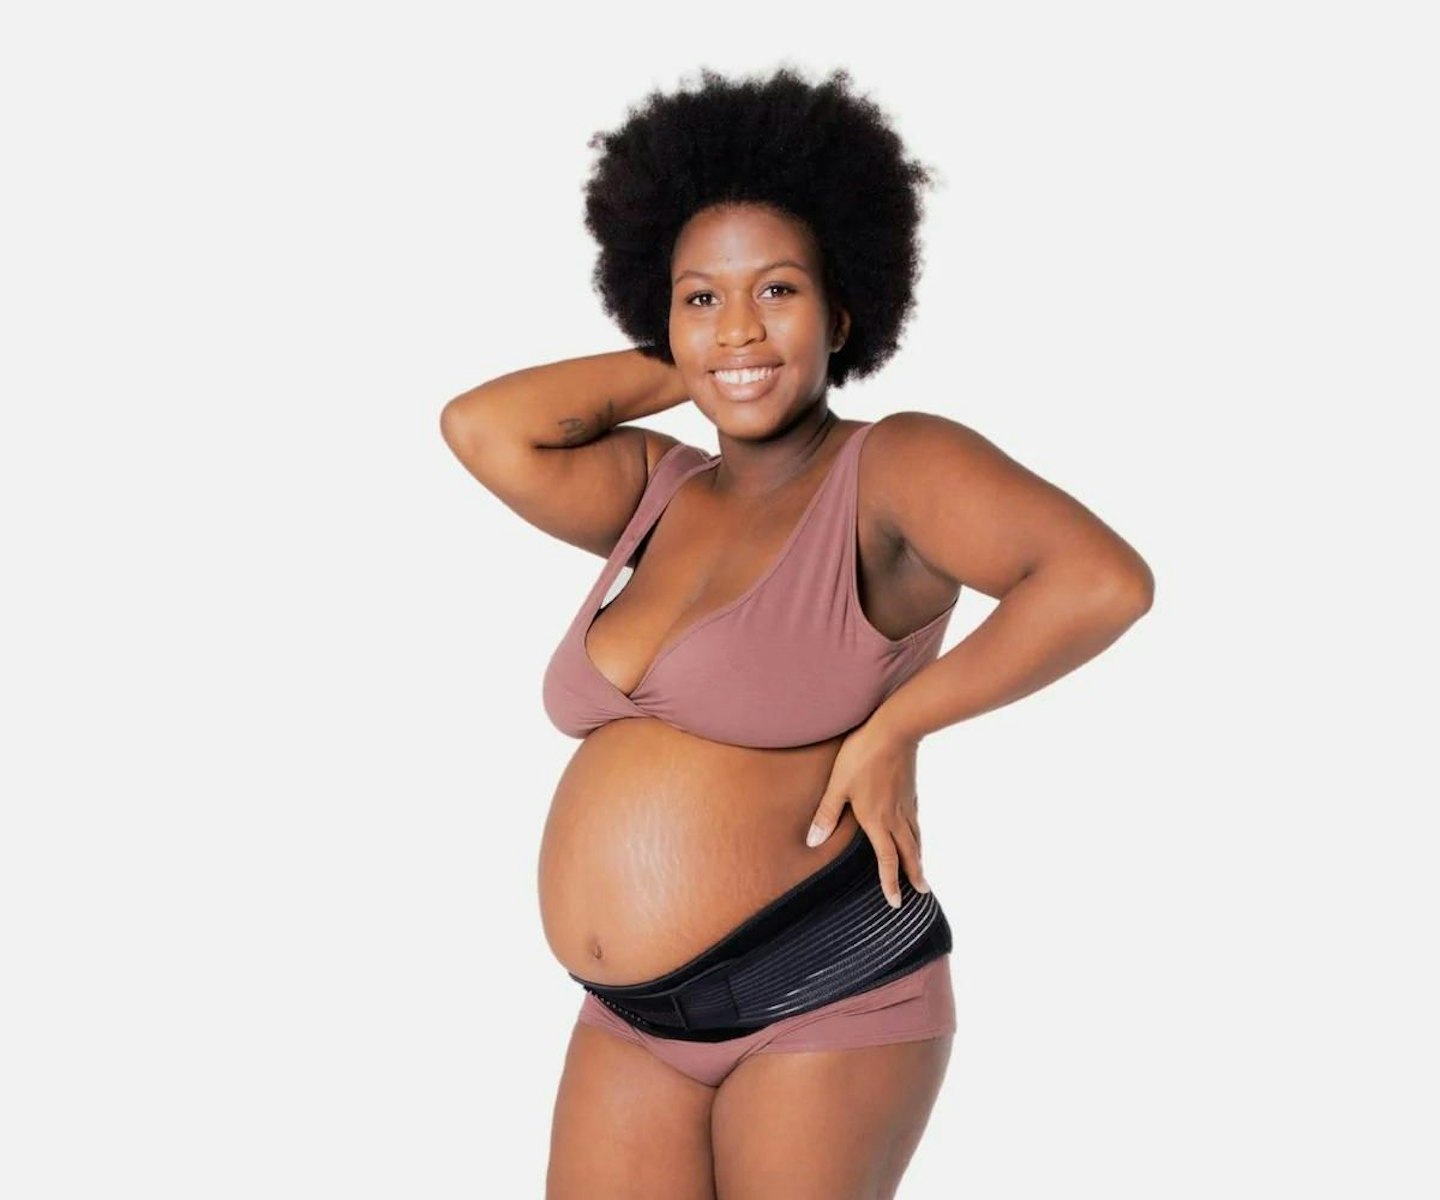 Close Pregnant Woman Underwear Wearing Elastic Pregnancy Bandage